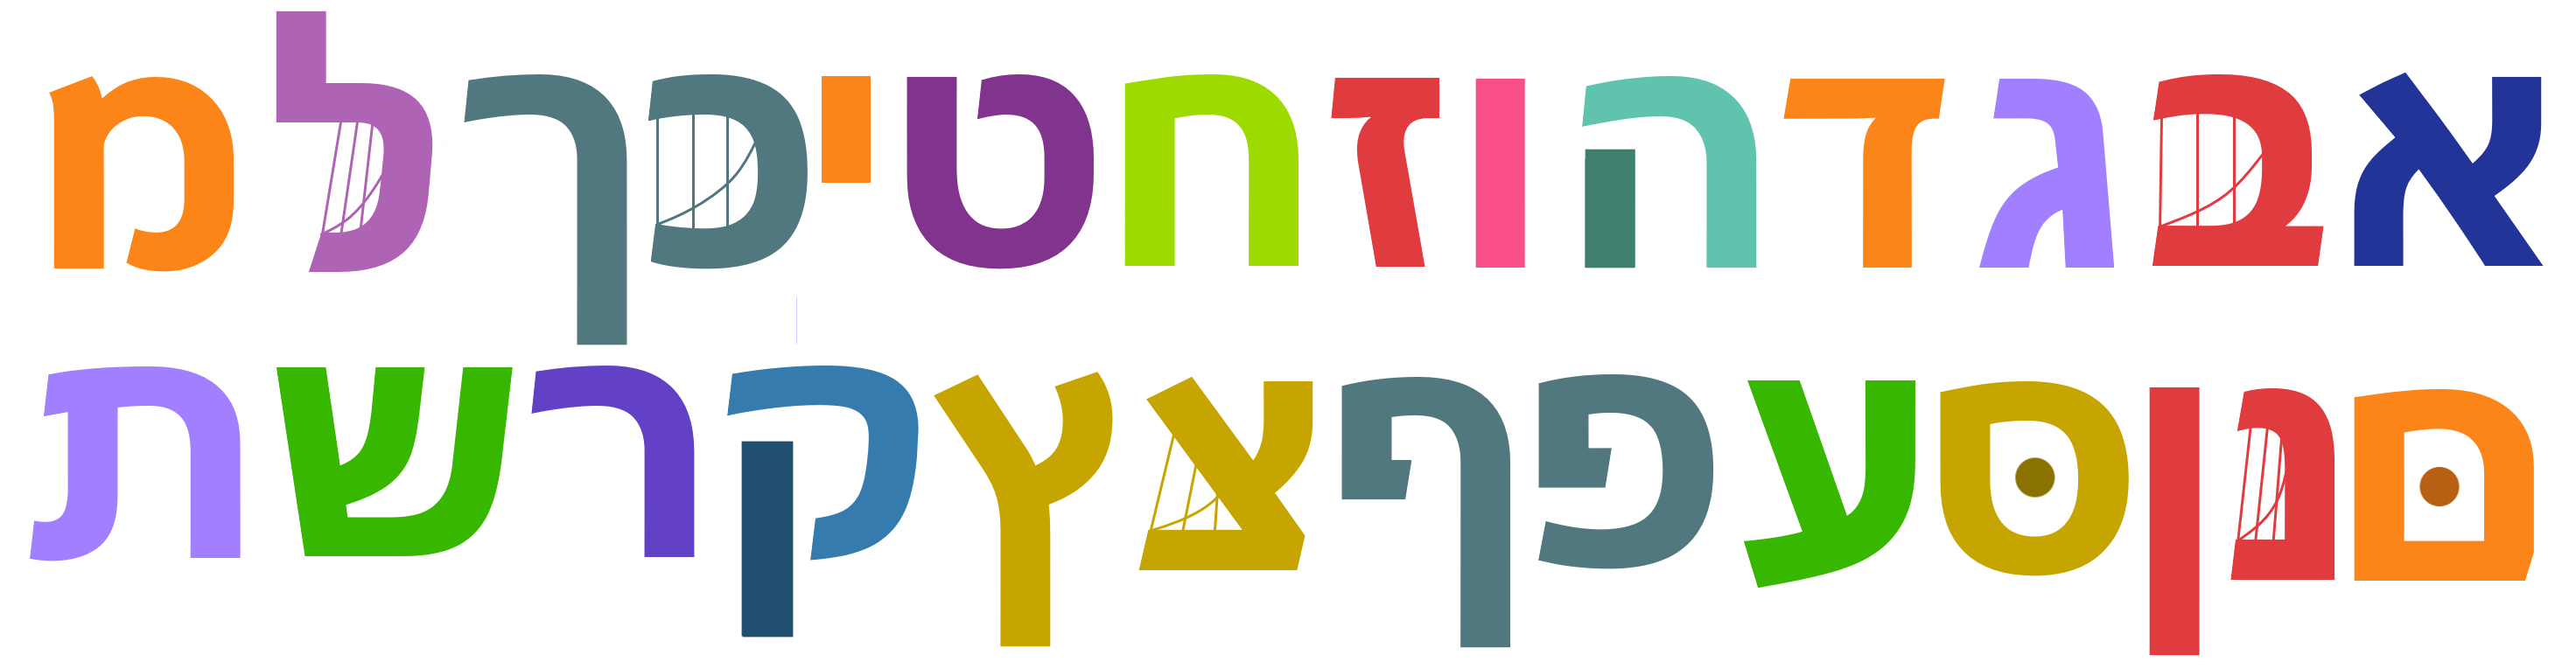 TVOKids cast - Greek alphabet by angelyemma on DeviantArt